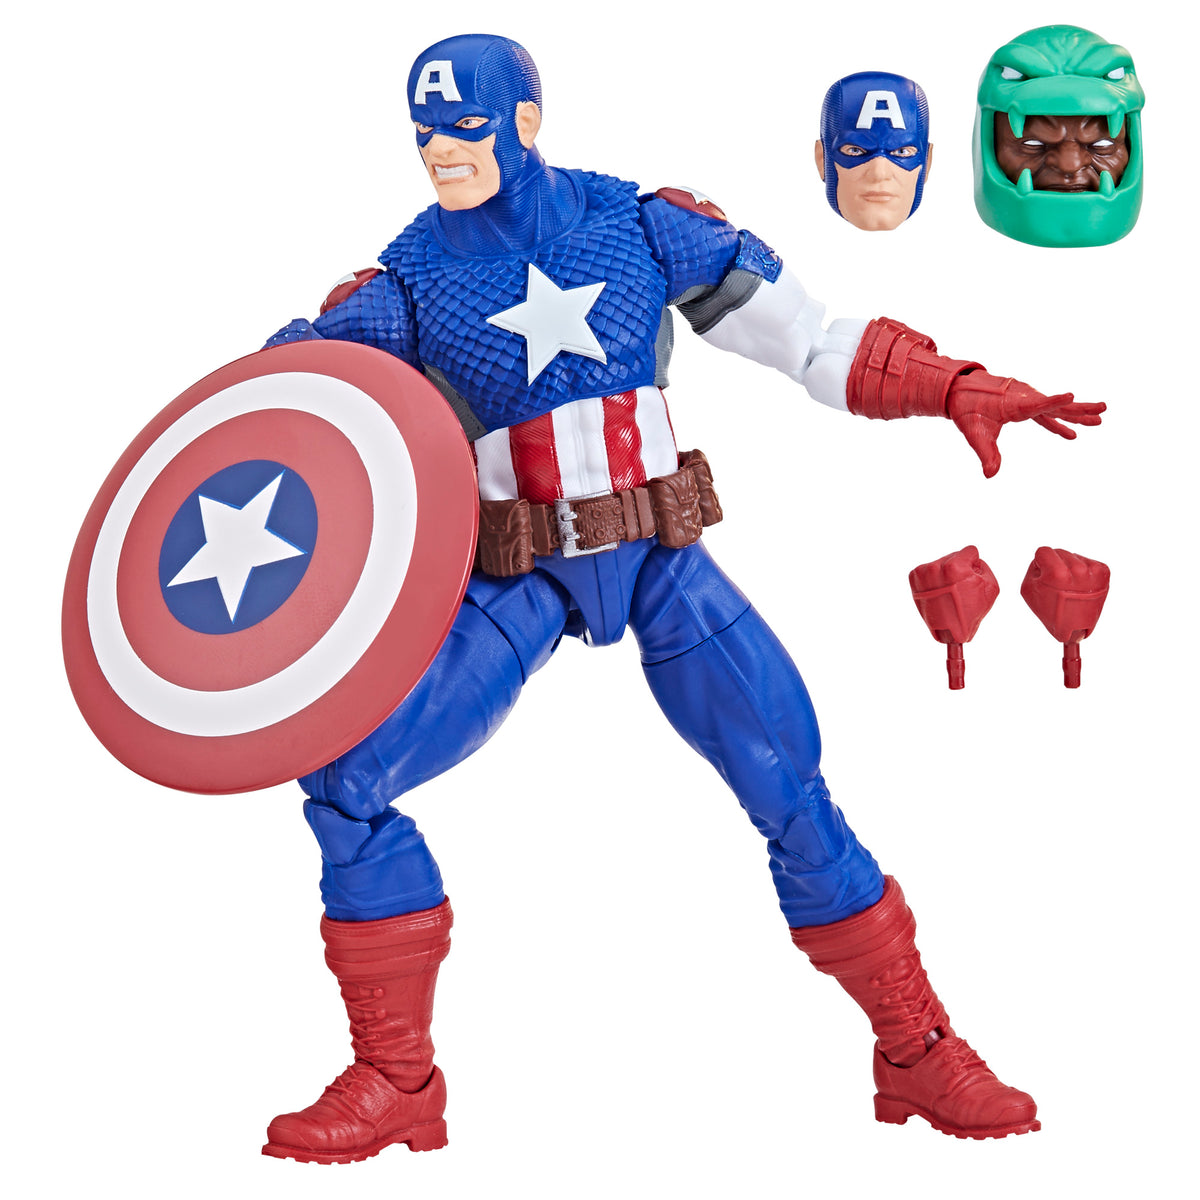 Figurine Captain America 20th Anniversary Legends Series